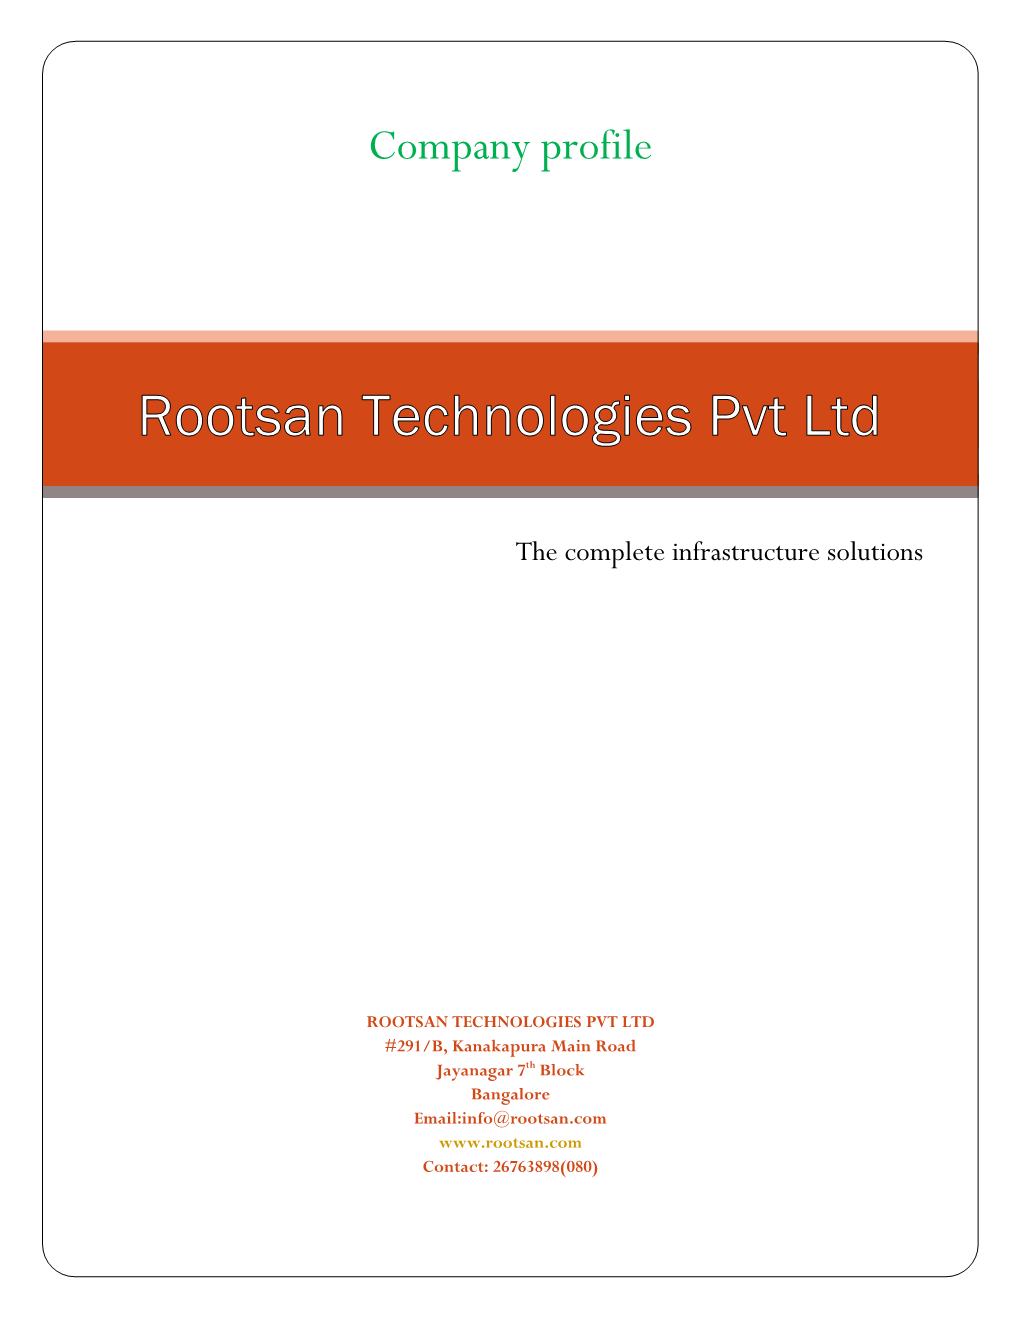 Rootsan Technologies Pvt Ltd